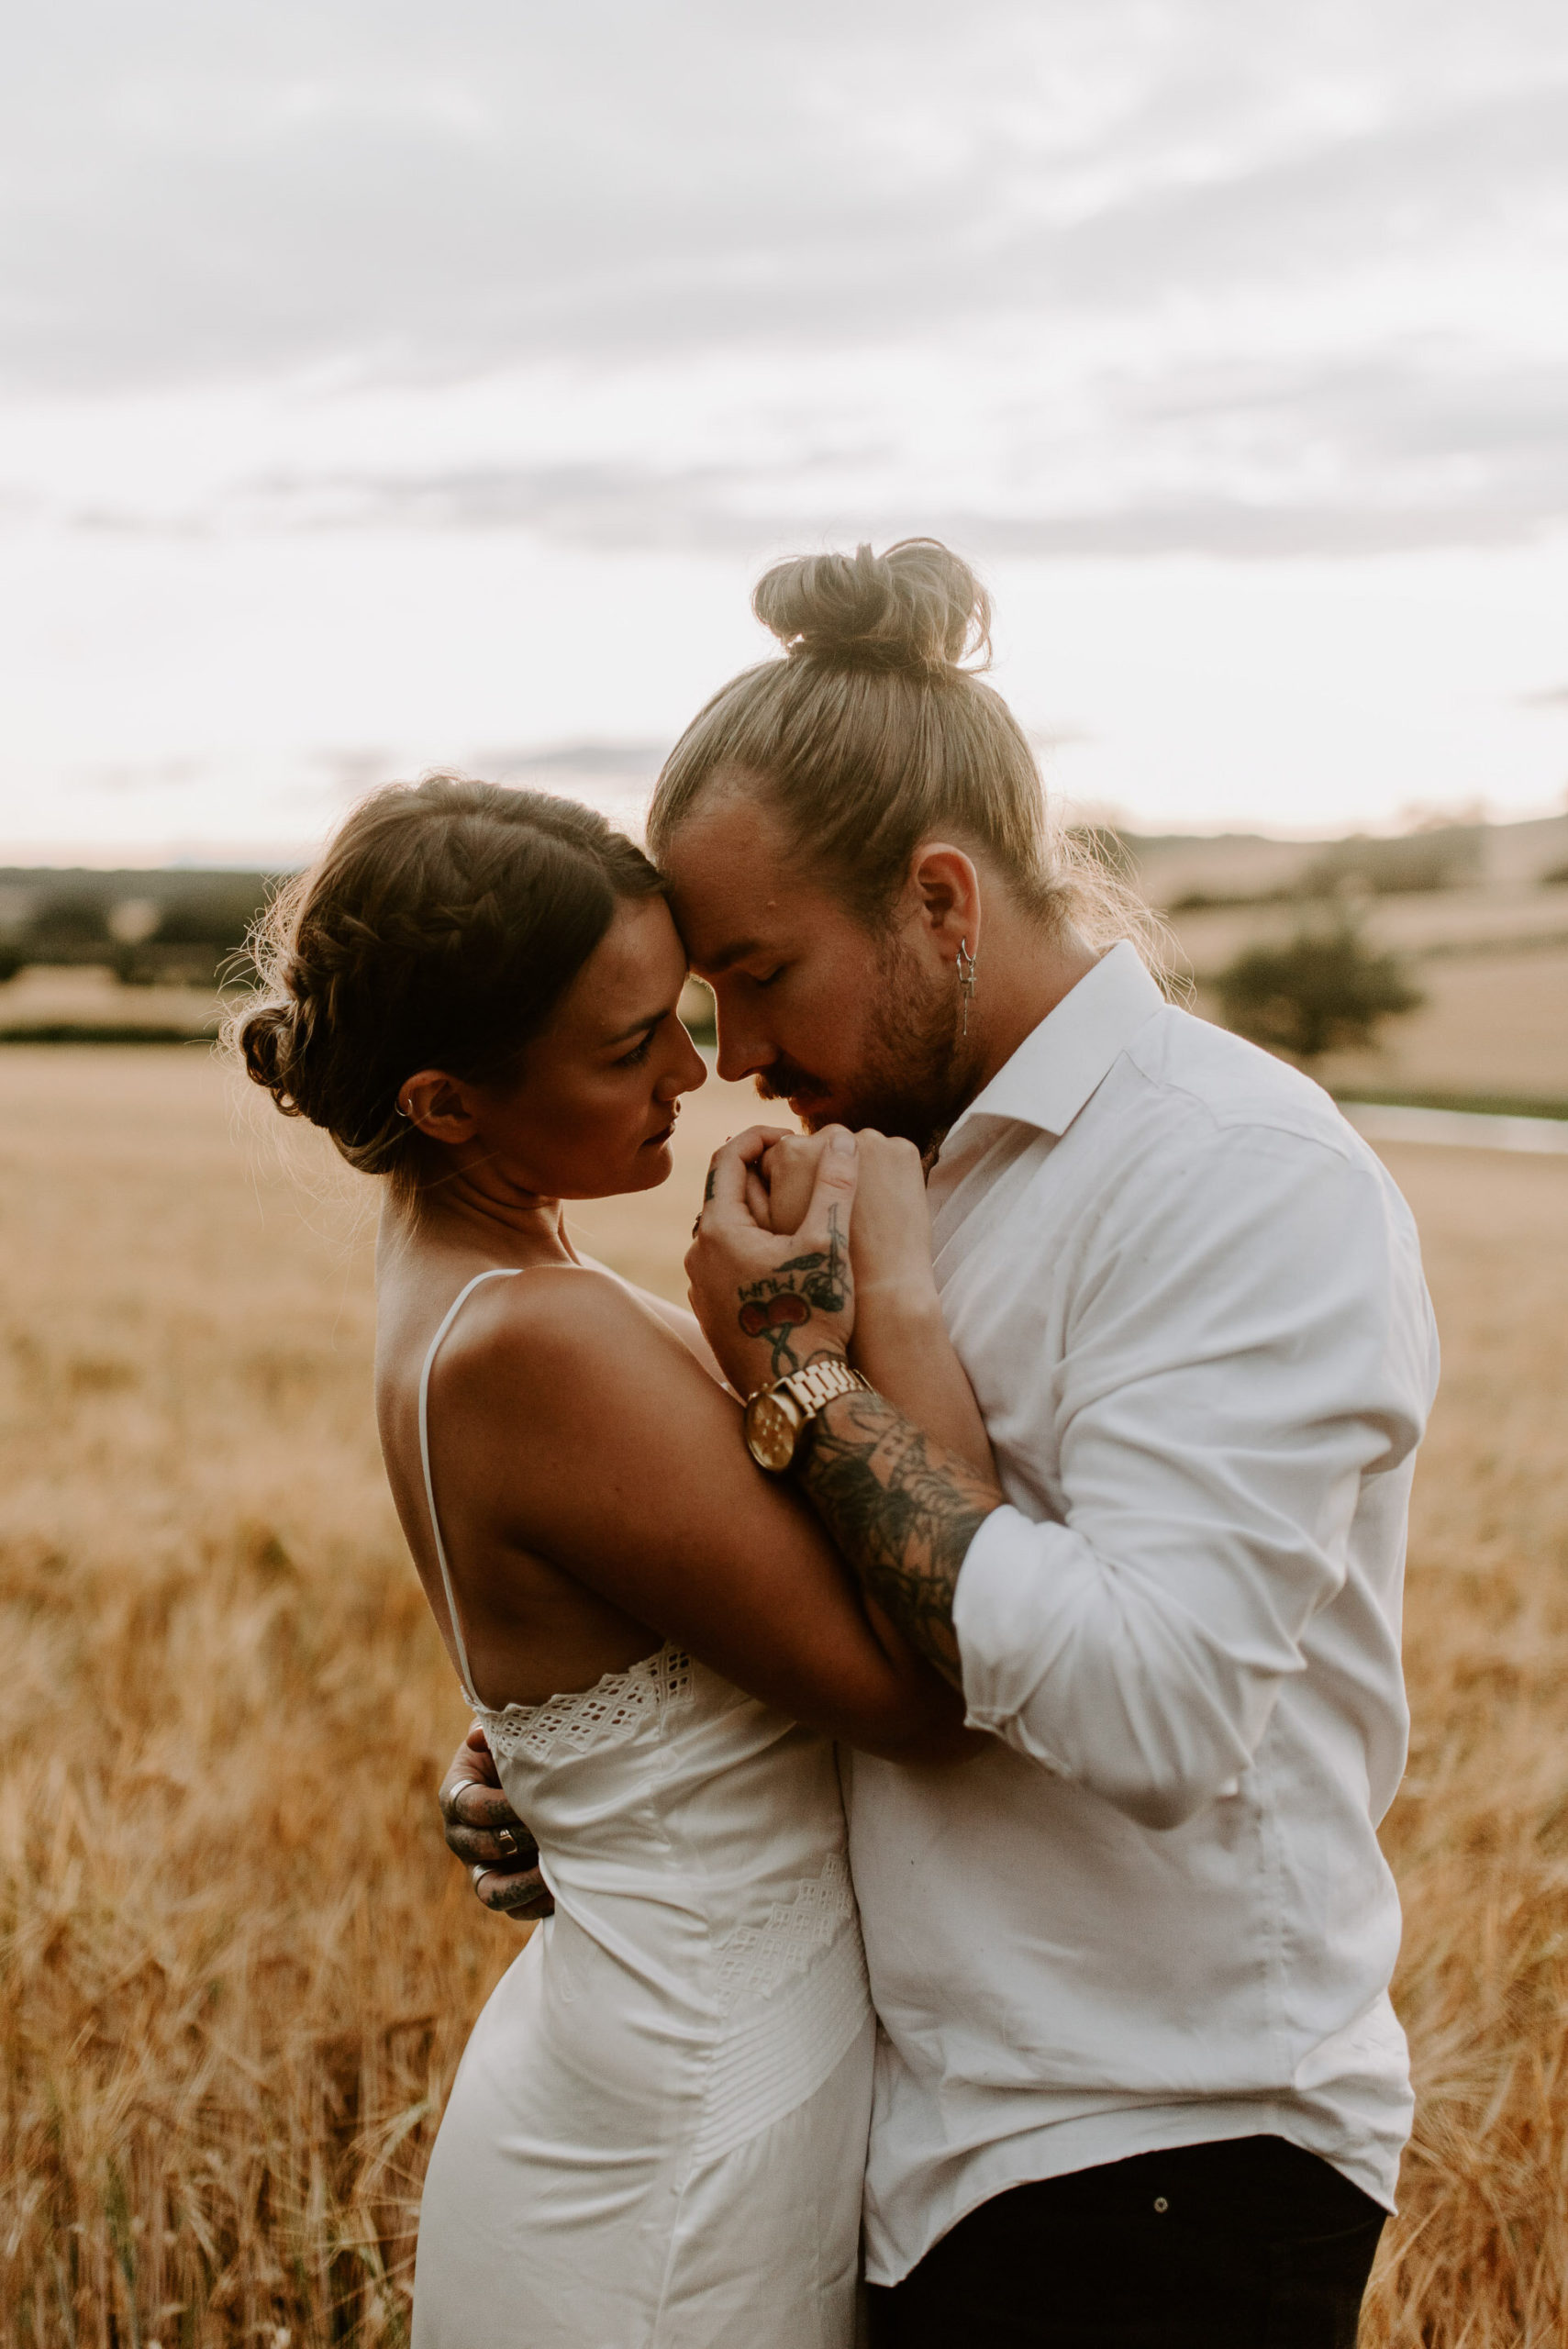 Romantic Boho Wedding Shoot - 25 July - Laura Williams Photography - LR-145 - Bury Court Barn.jpg